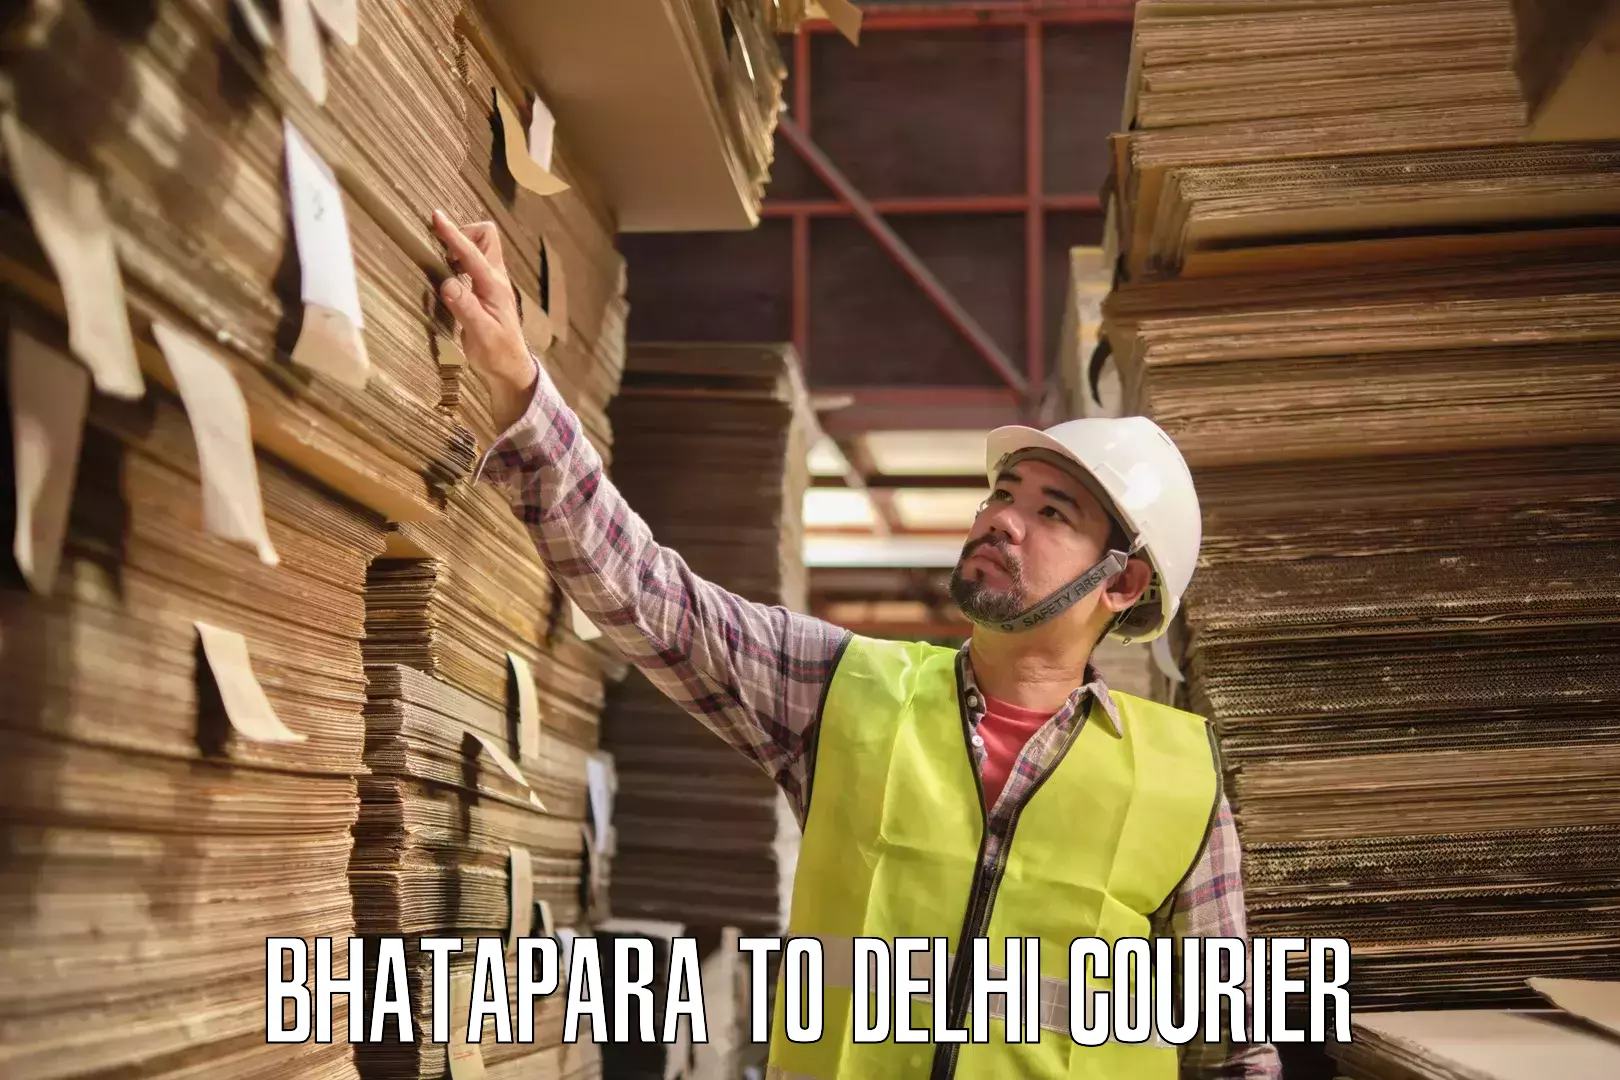 Enhanced shipping experience Bhatapara to Ashok Vihar